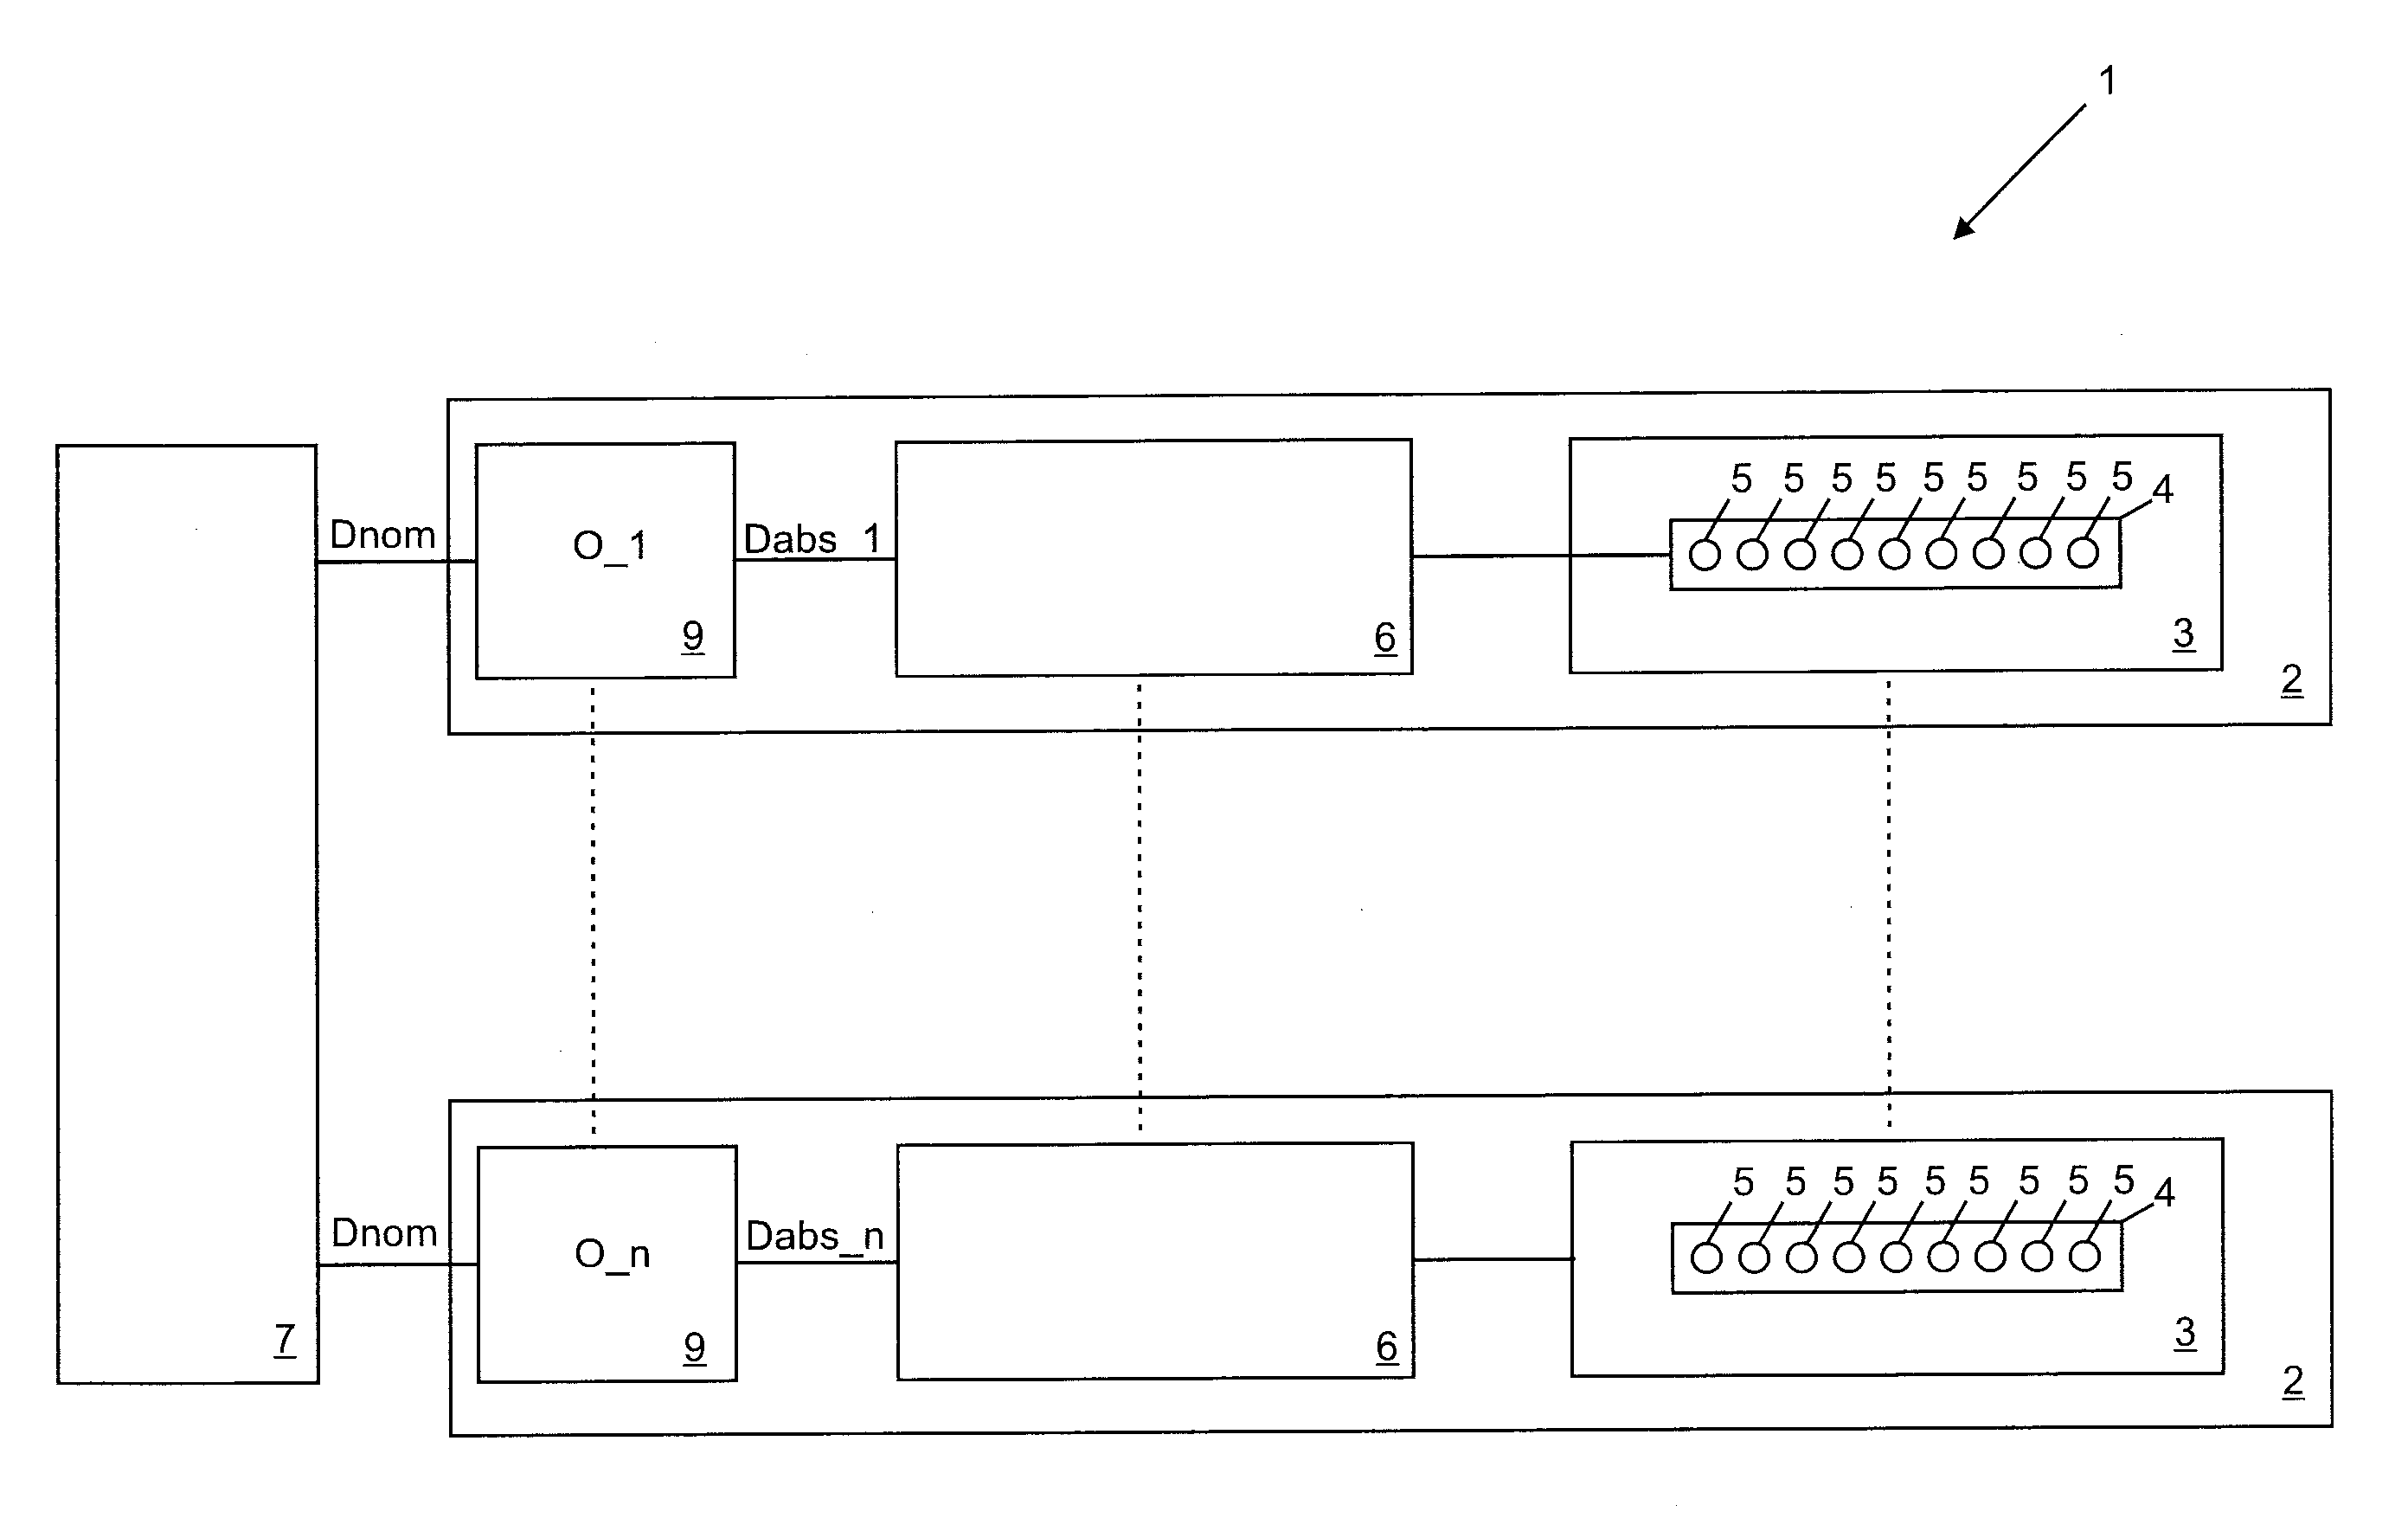 Illumination apparatus and method for operating the illumination apparatus in a dim mode